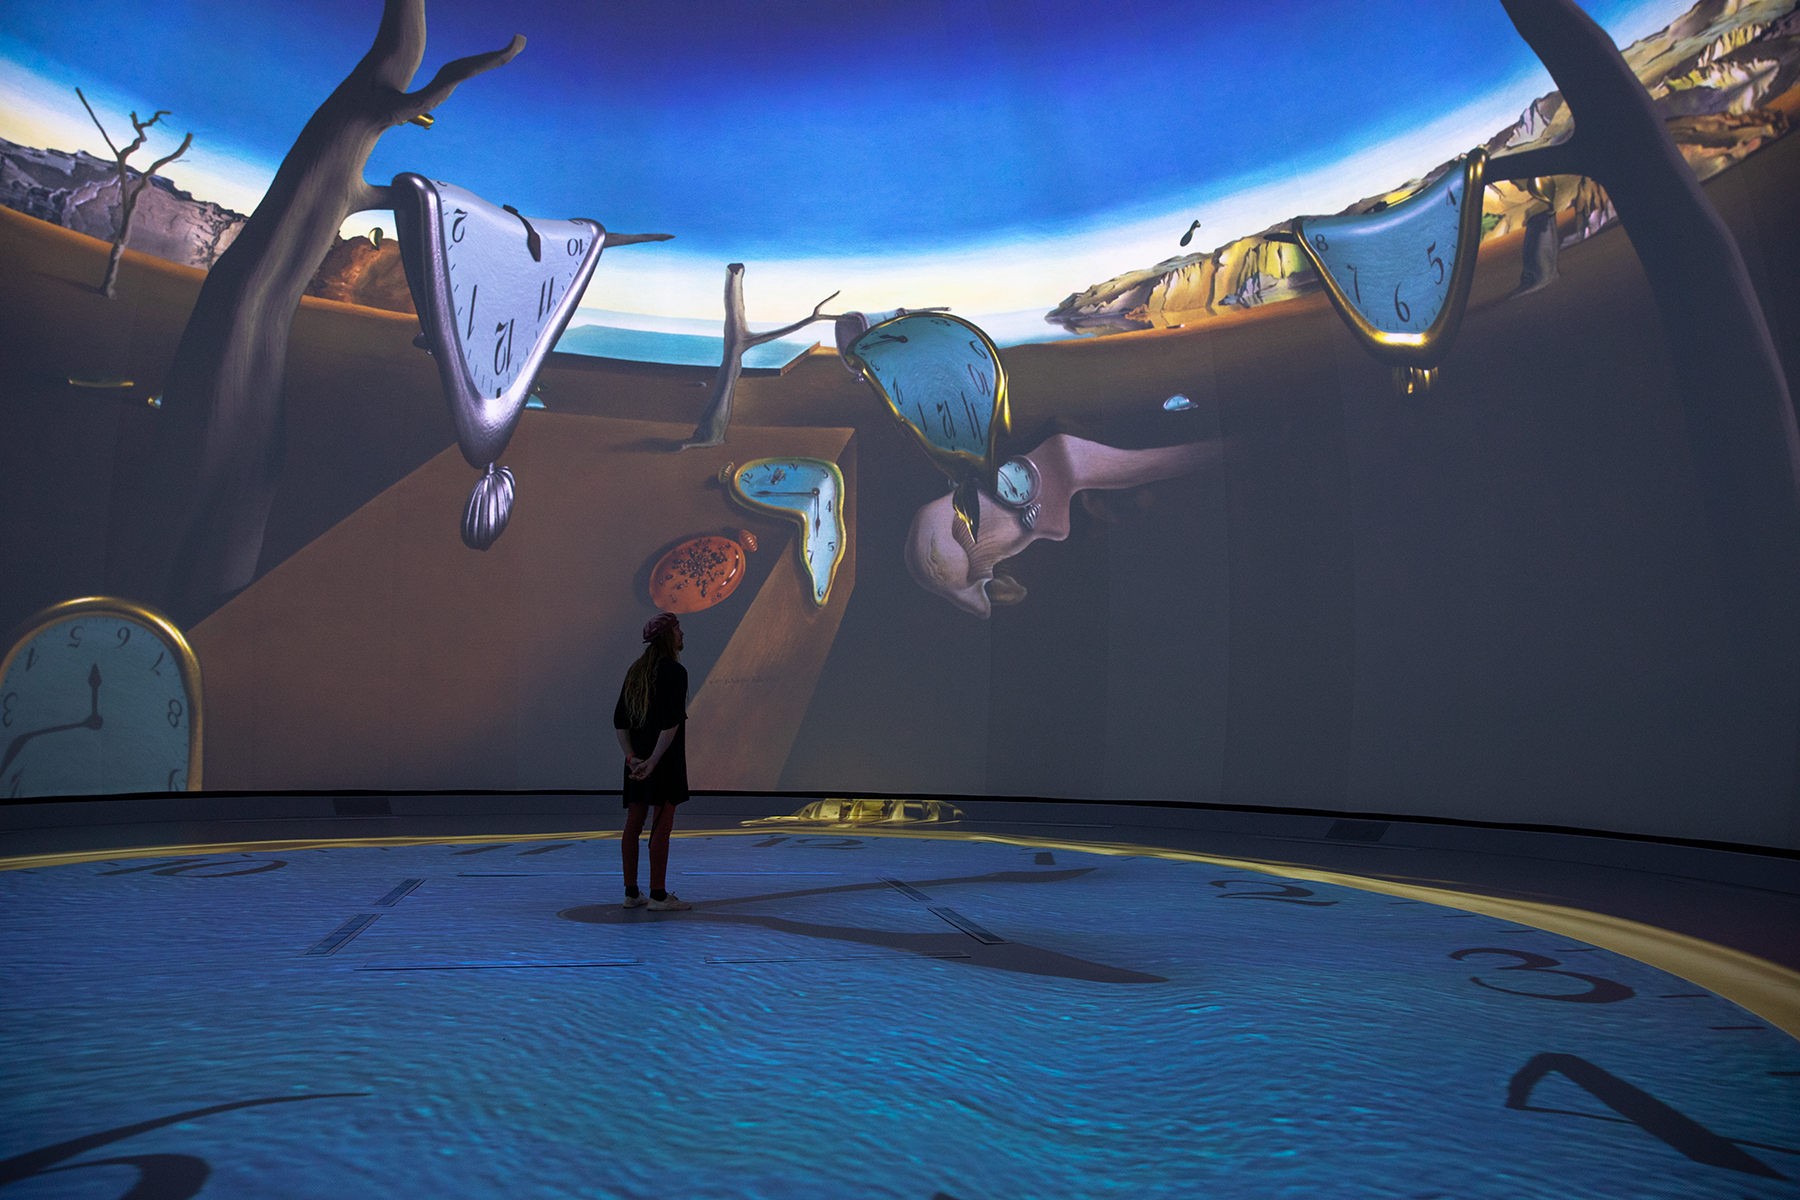 Salvador Dali Museum Tampa Florida Sphere Dome Immersive Exhibit